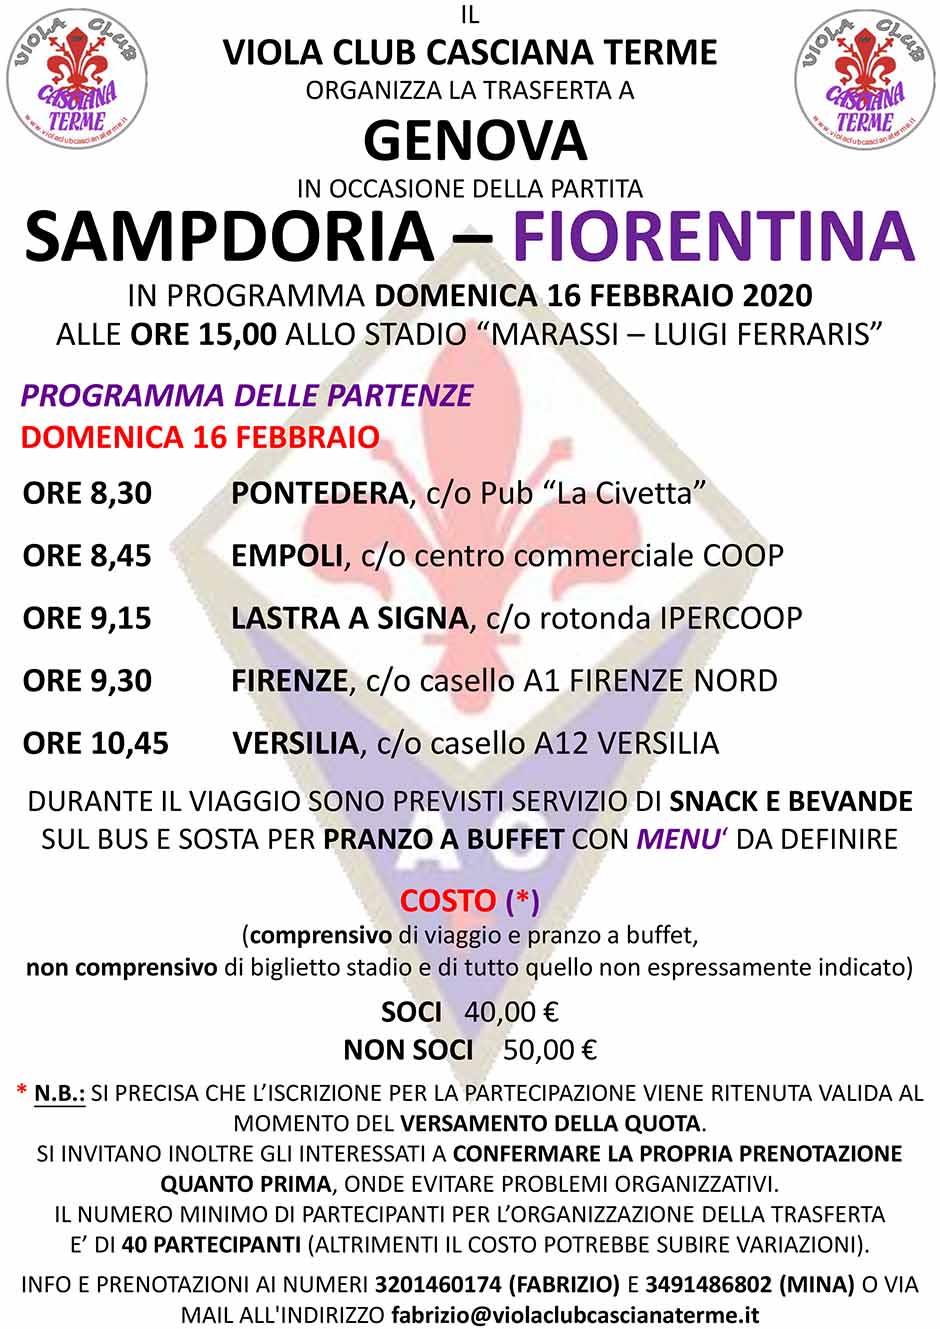 Trasferta Verona 2019